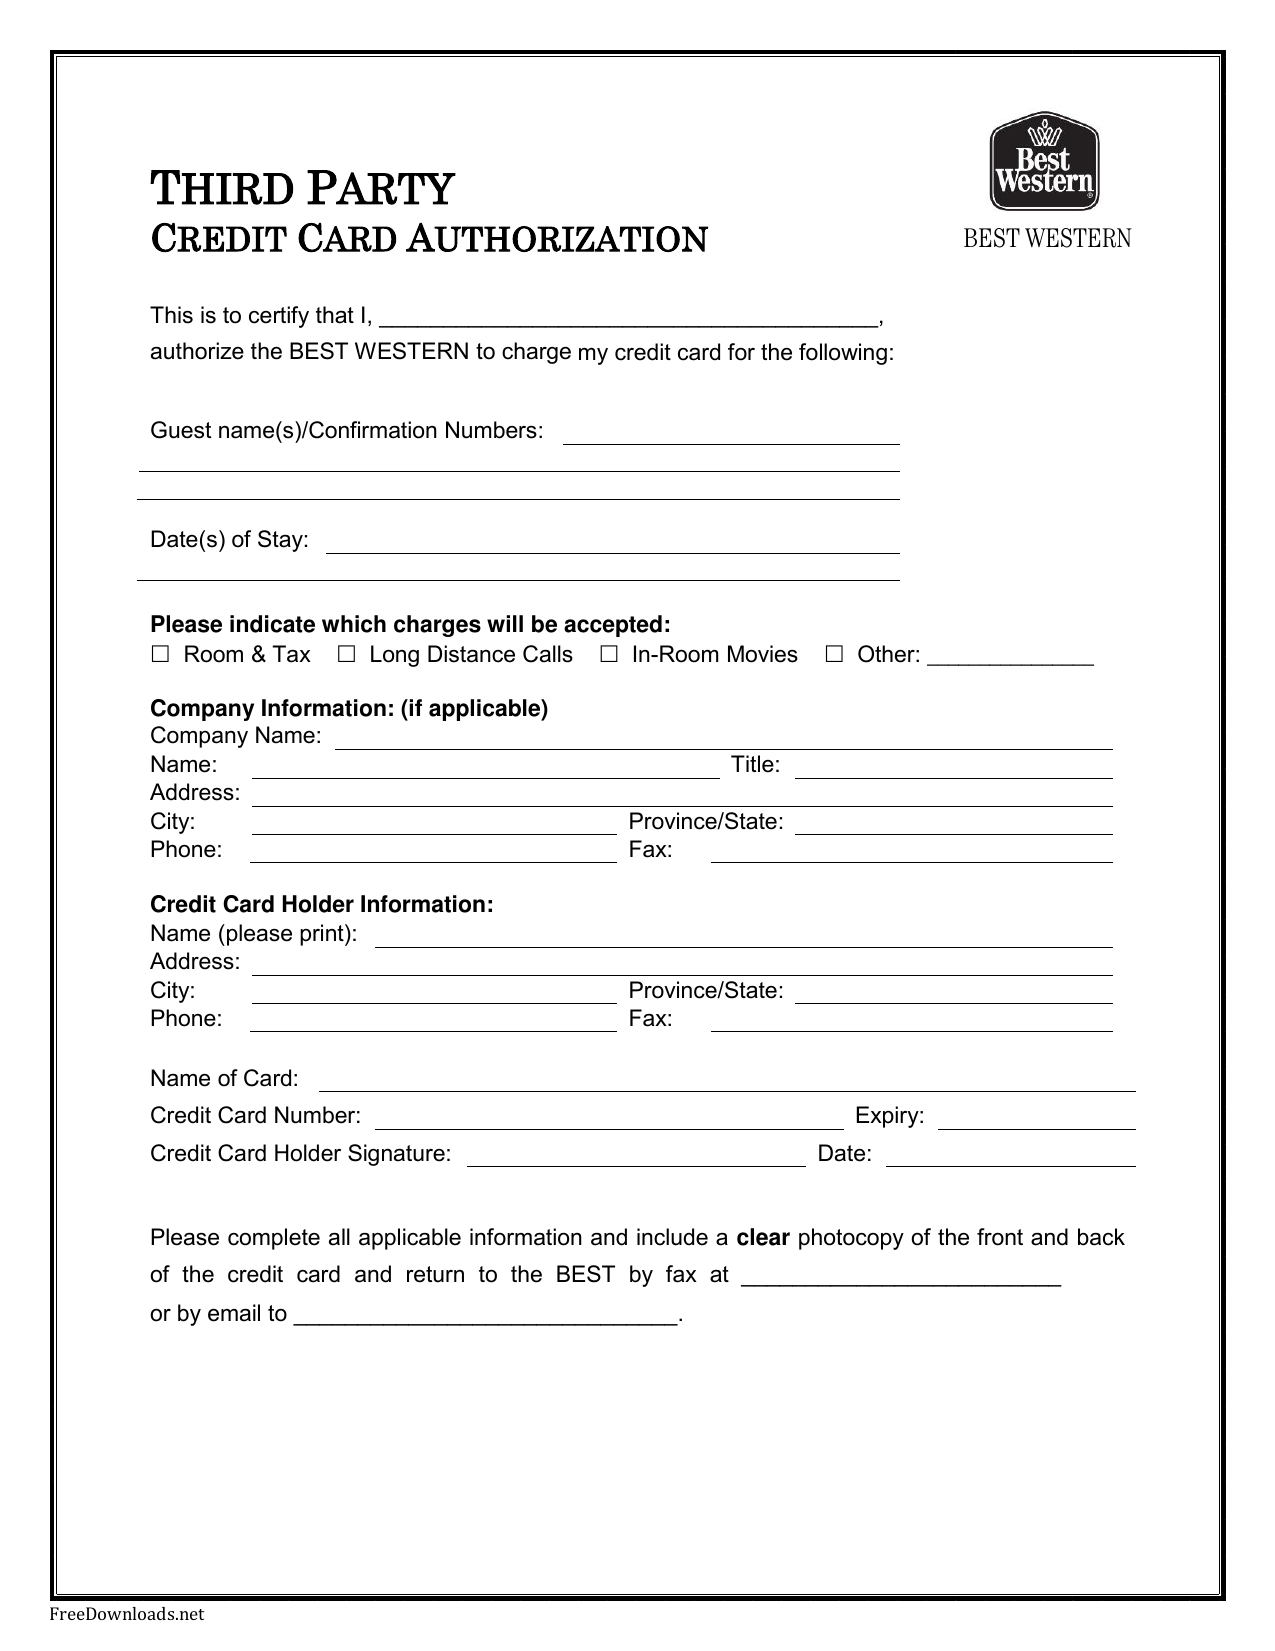 Authorization Form Templates - Dalep.midnightpig.co With Credit Card Authorization Form Template Word